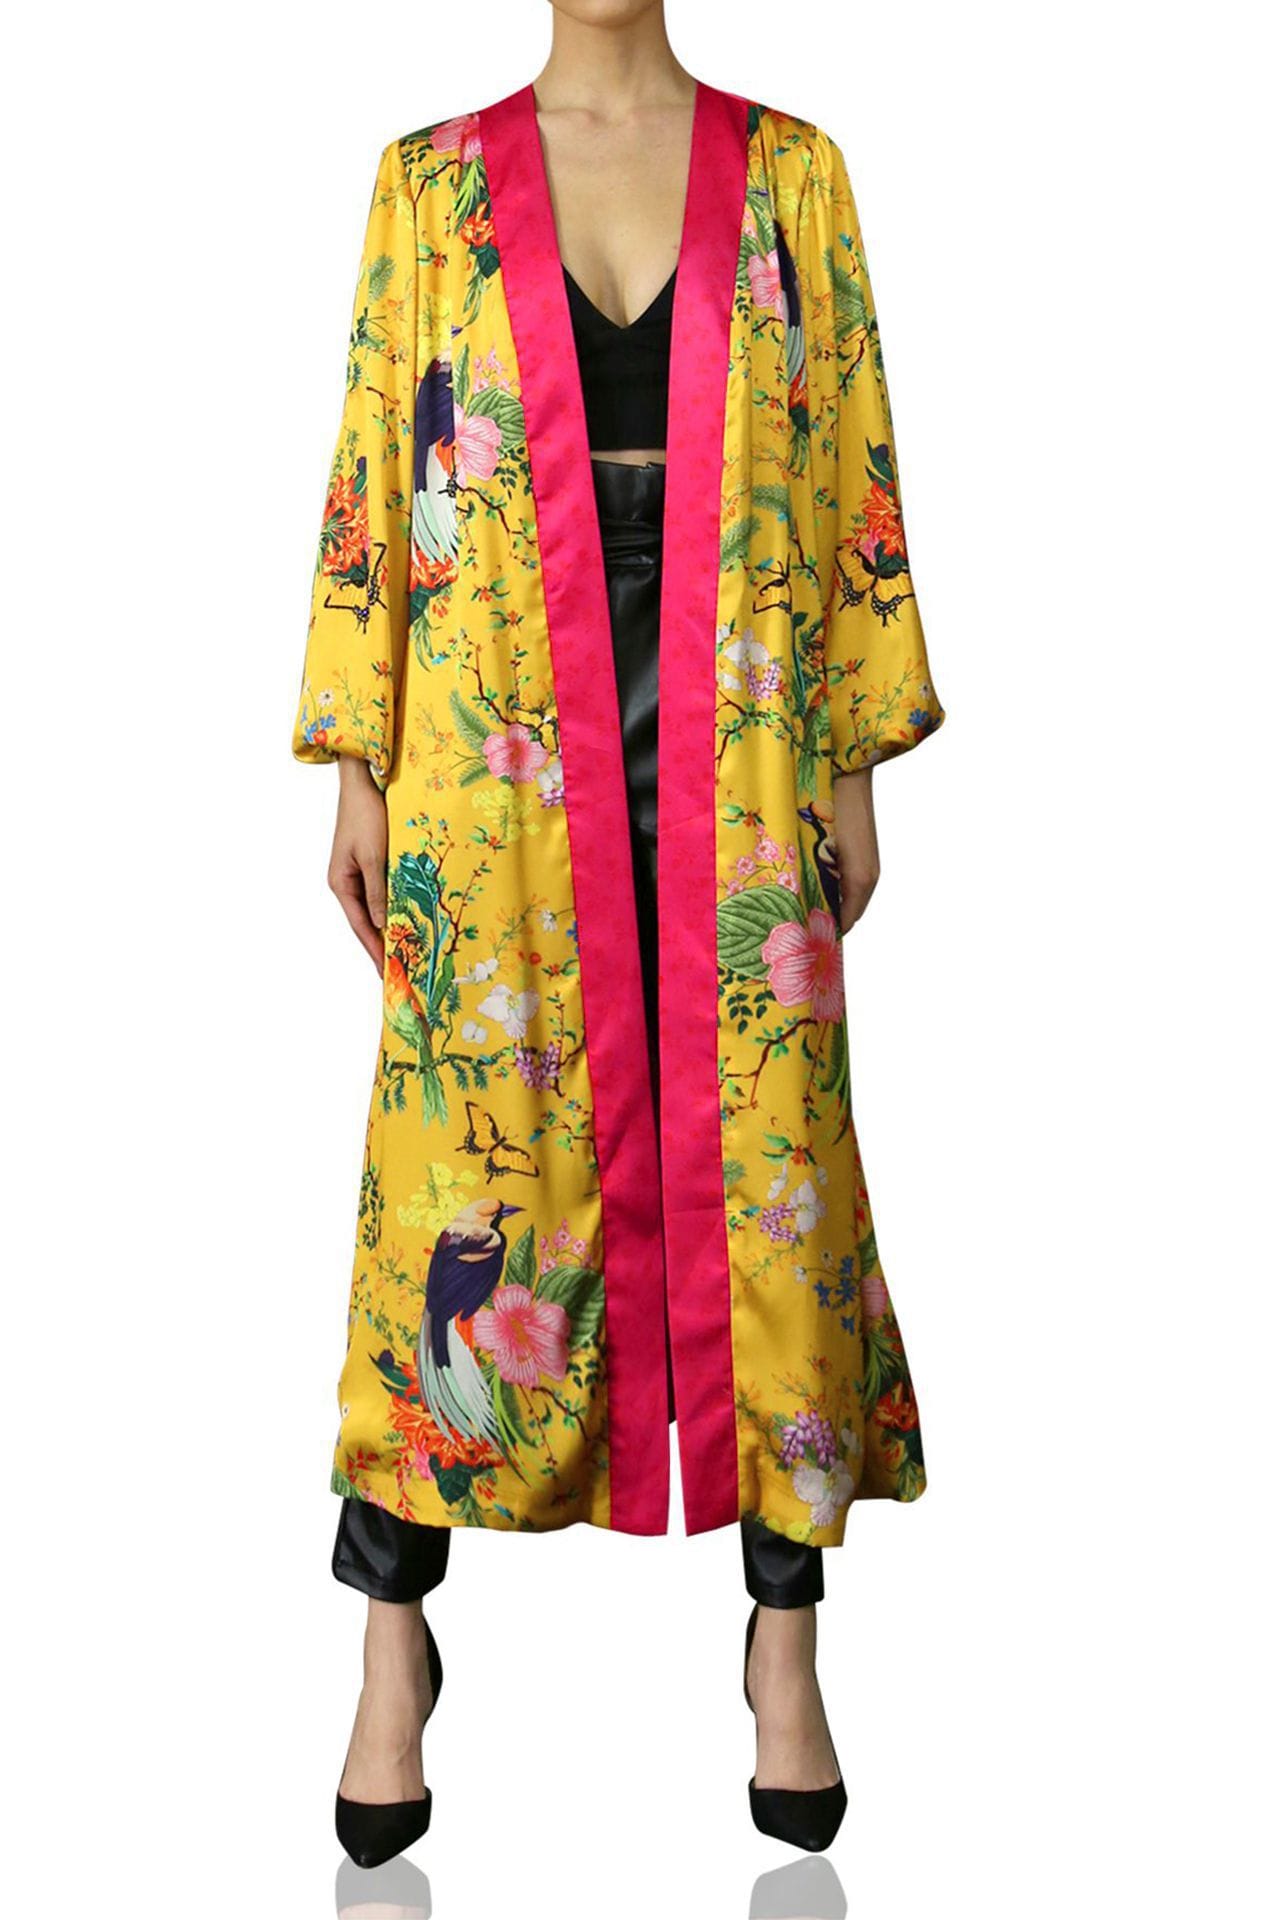 "Kyle X Shahida" "kimono silk robe women's" "beautiful kimono"  "plus size long kimono" "yellow silk kimono robe" "sexy silk robe"